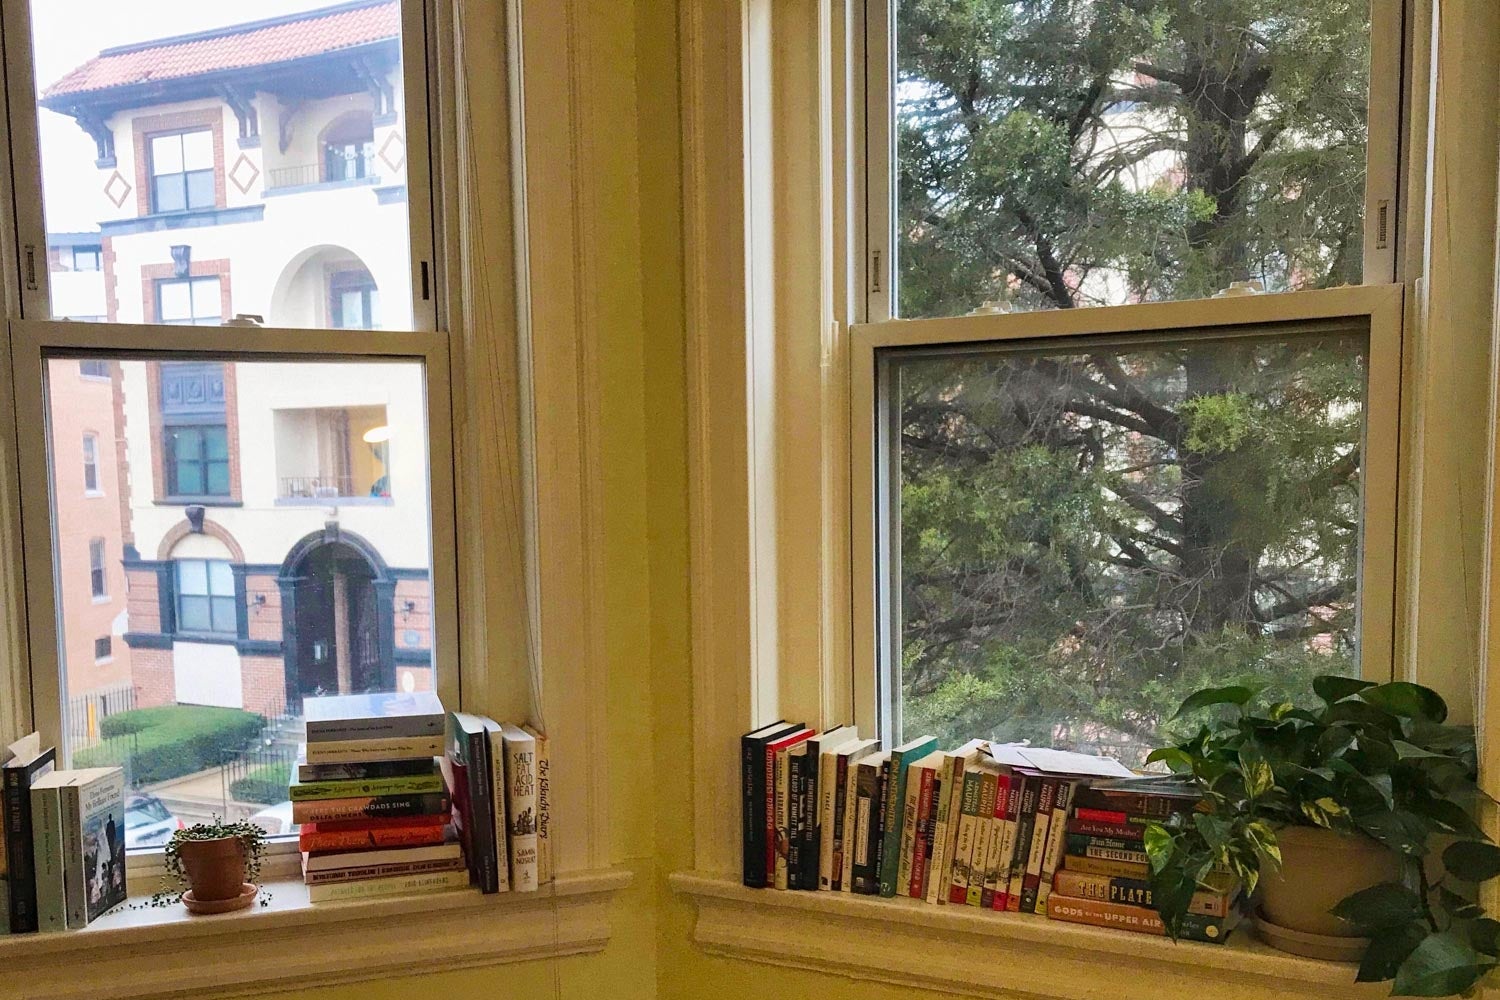 A windowsill covered in books.